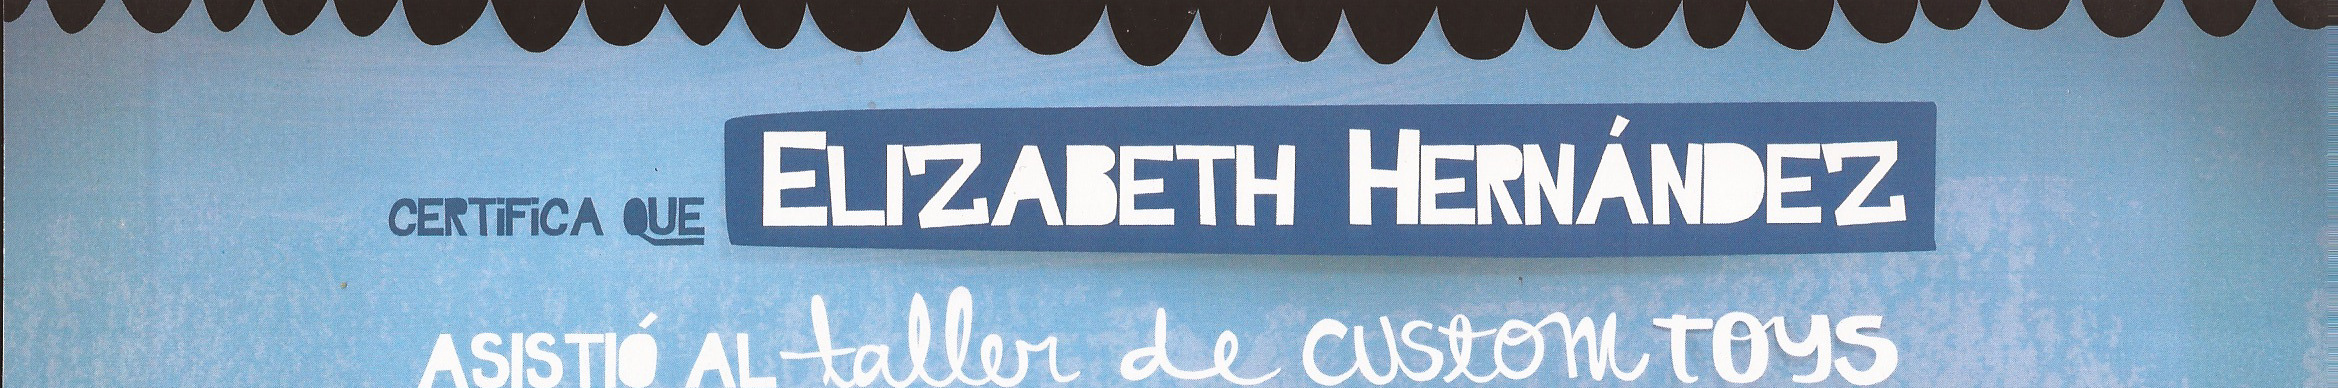 Elizabeth Hernández's profile banner